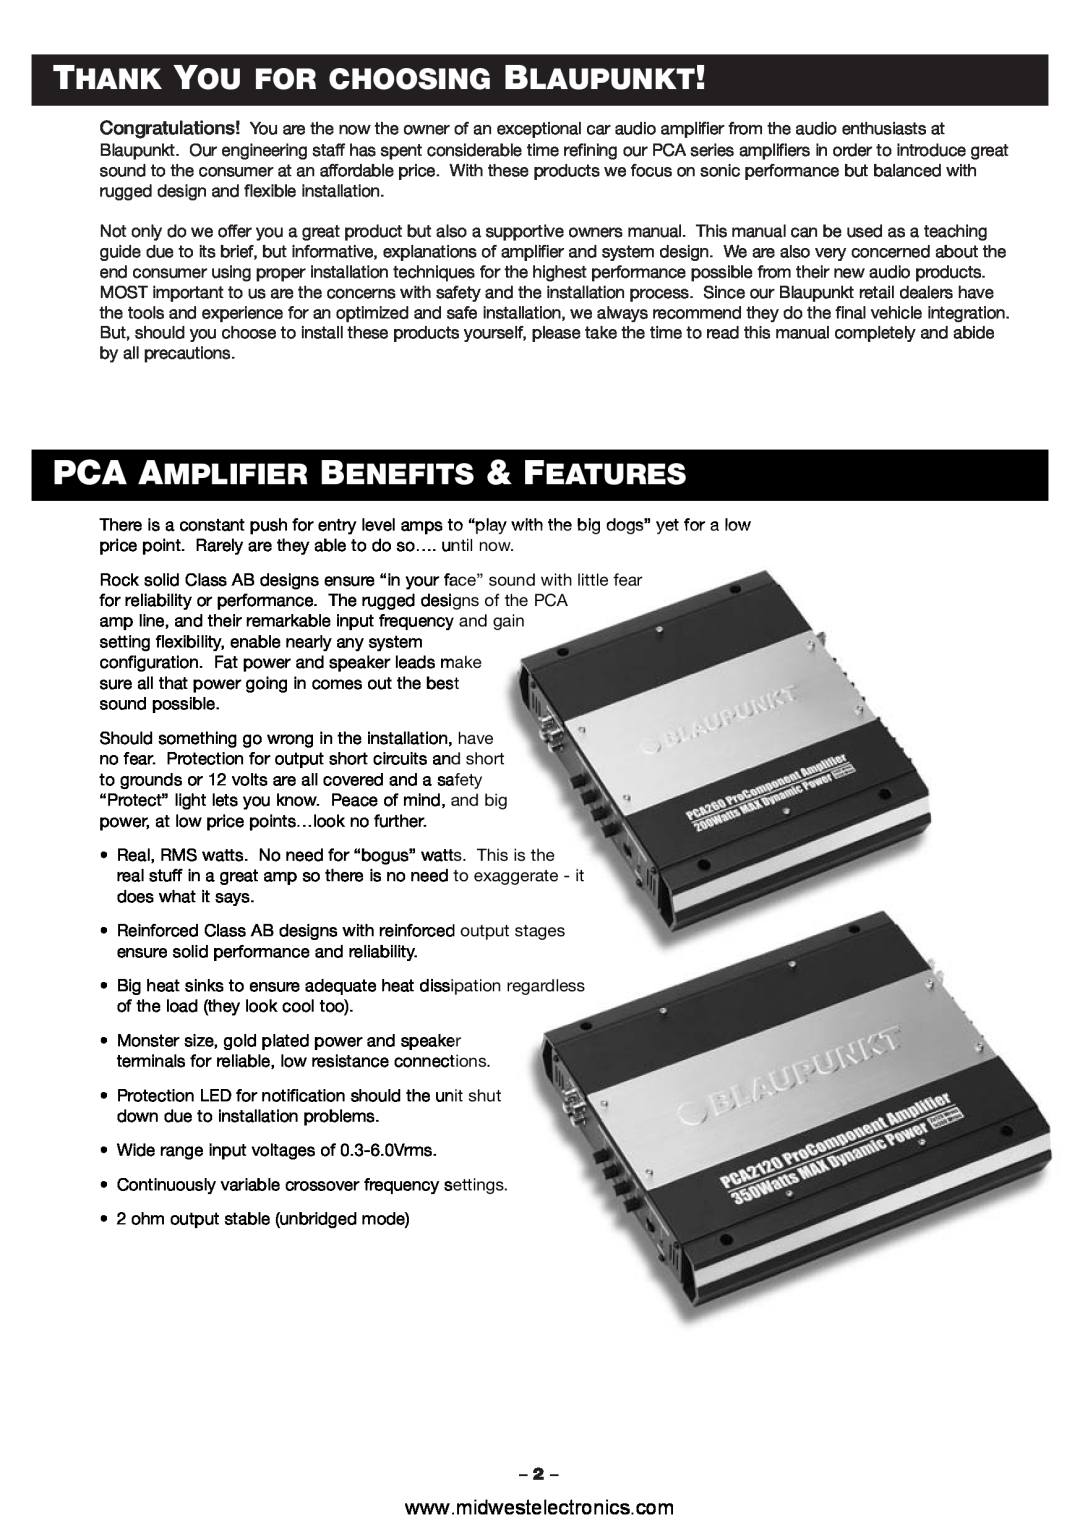 Blaupunkt PCA2120, PCA260 manual Thank You For Choosing Blaupunkt, Pca Amplifier Benefits & Features 